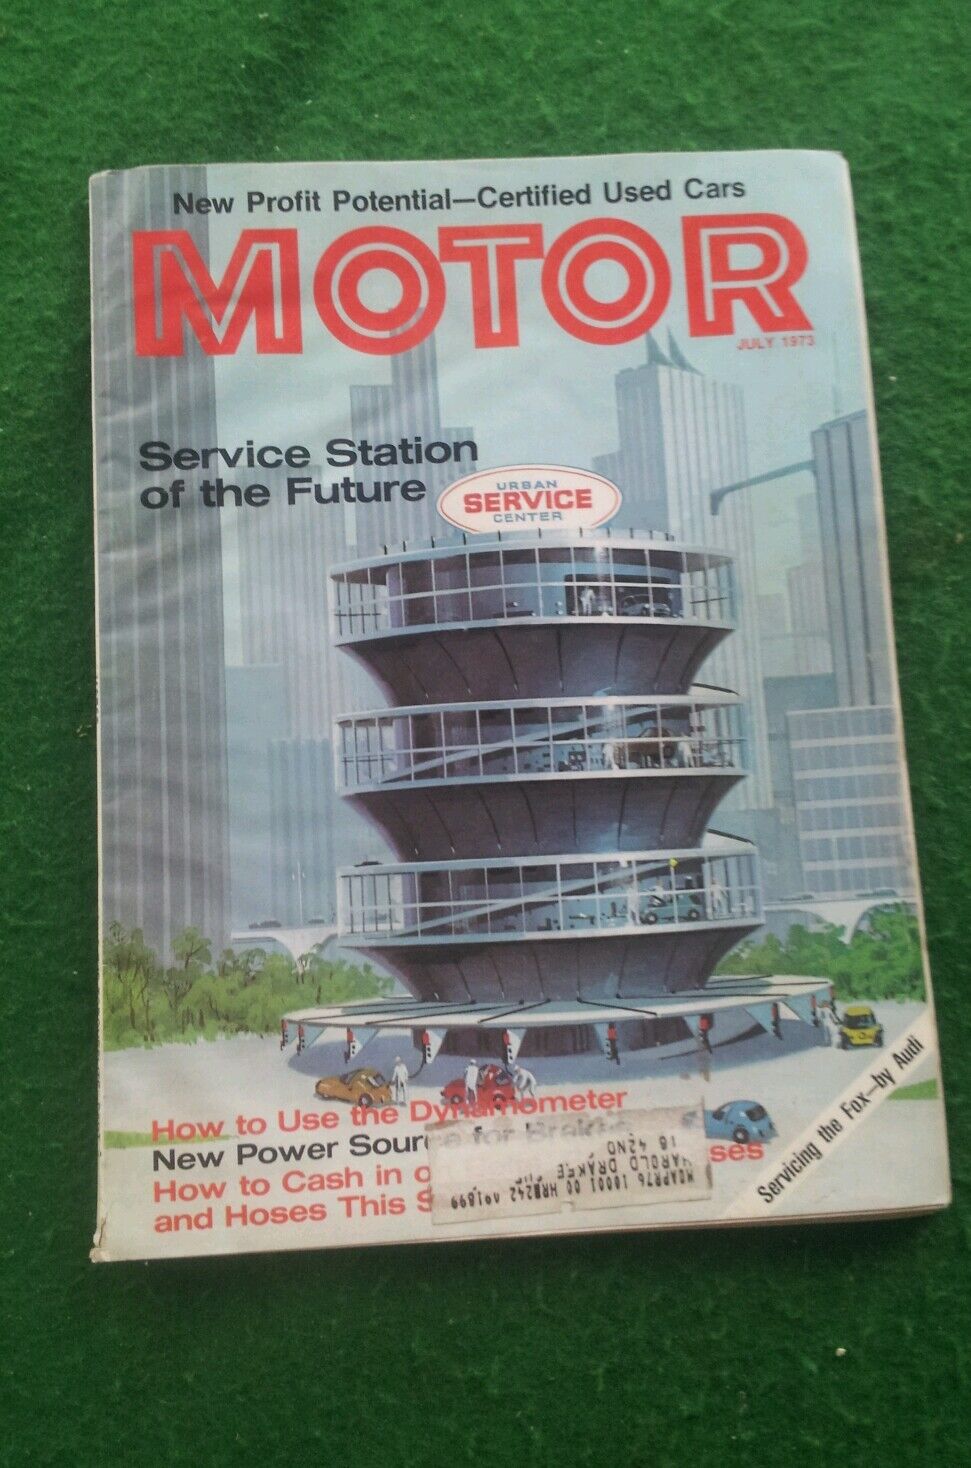 July 1973 Motor Print Ad informational magazine 